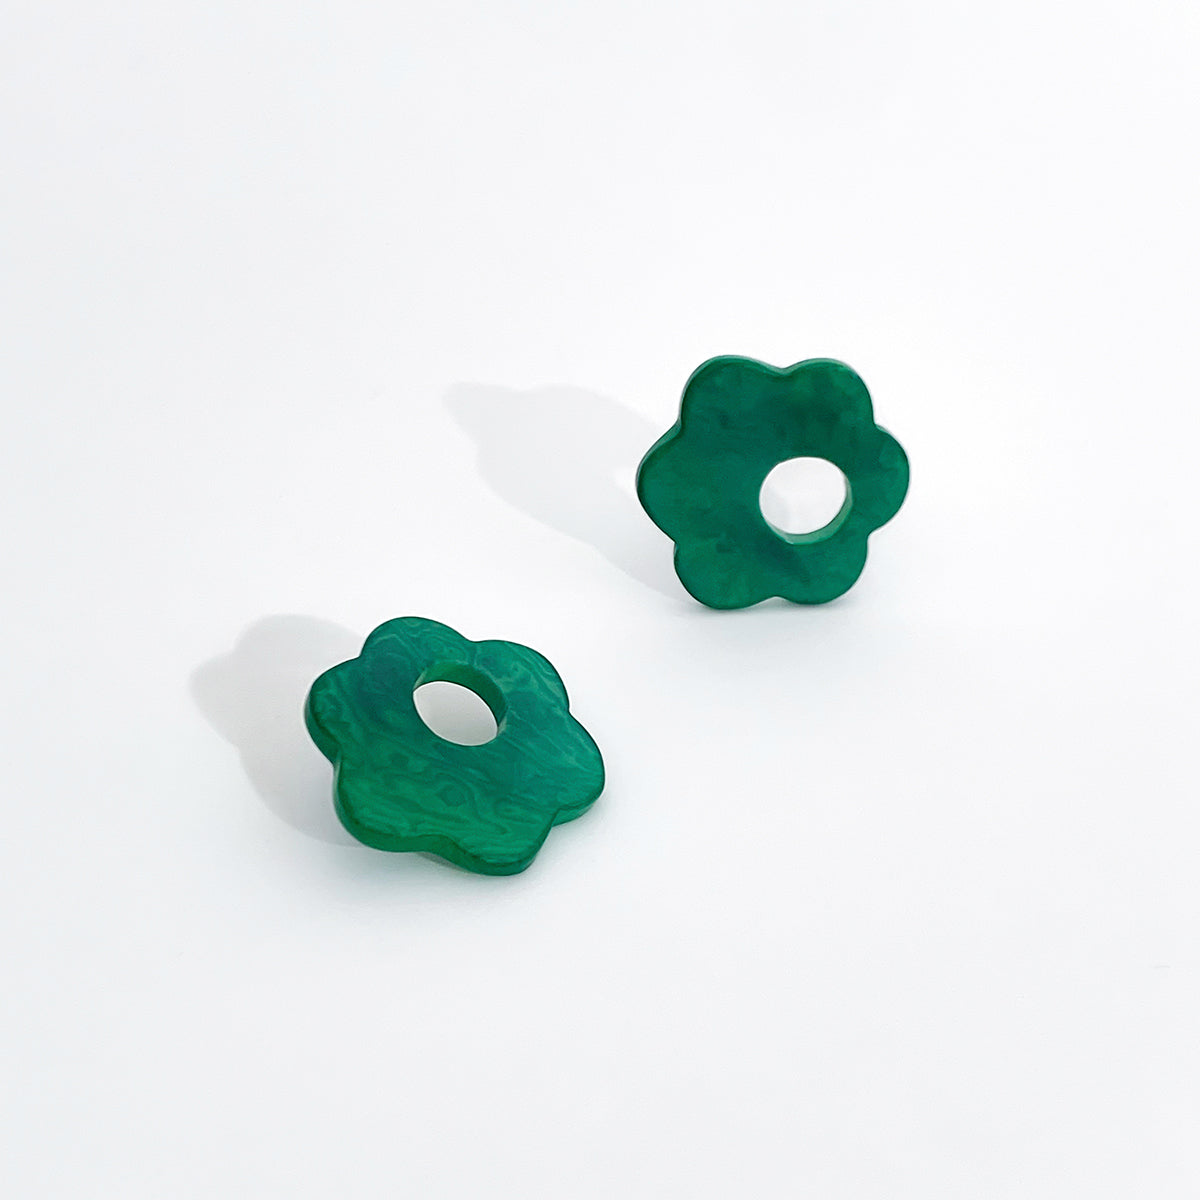 Flower shaped earring Bambita in green